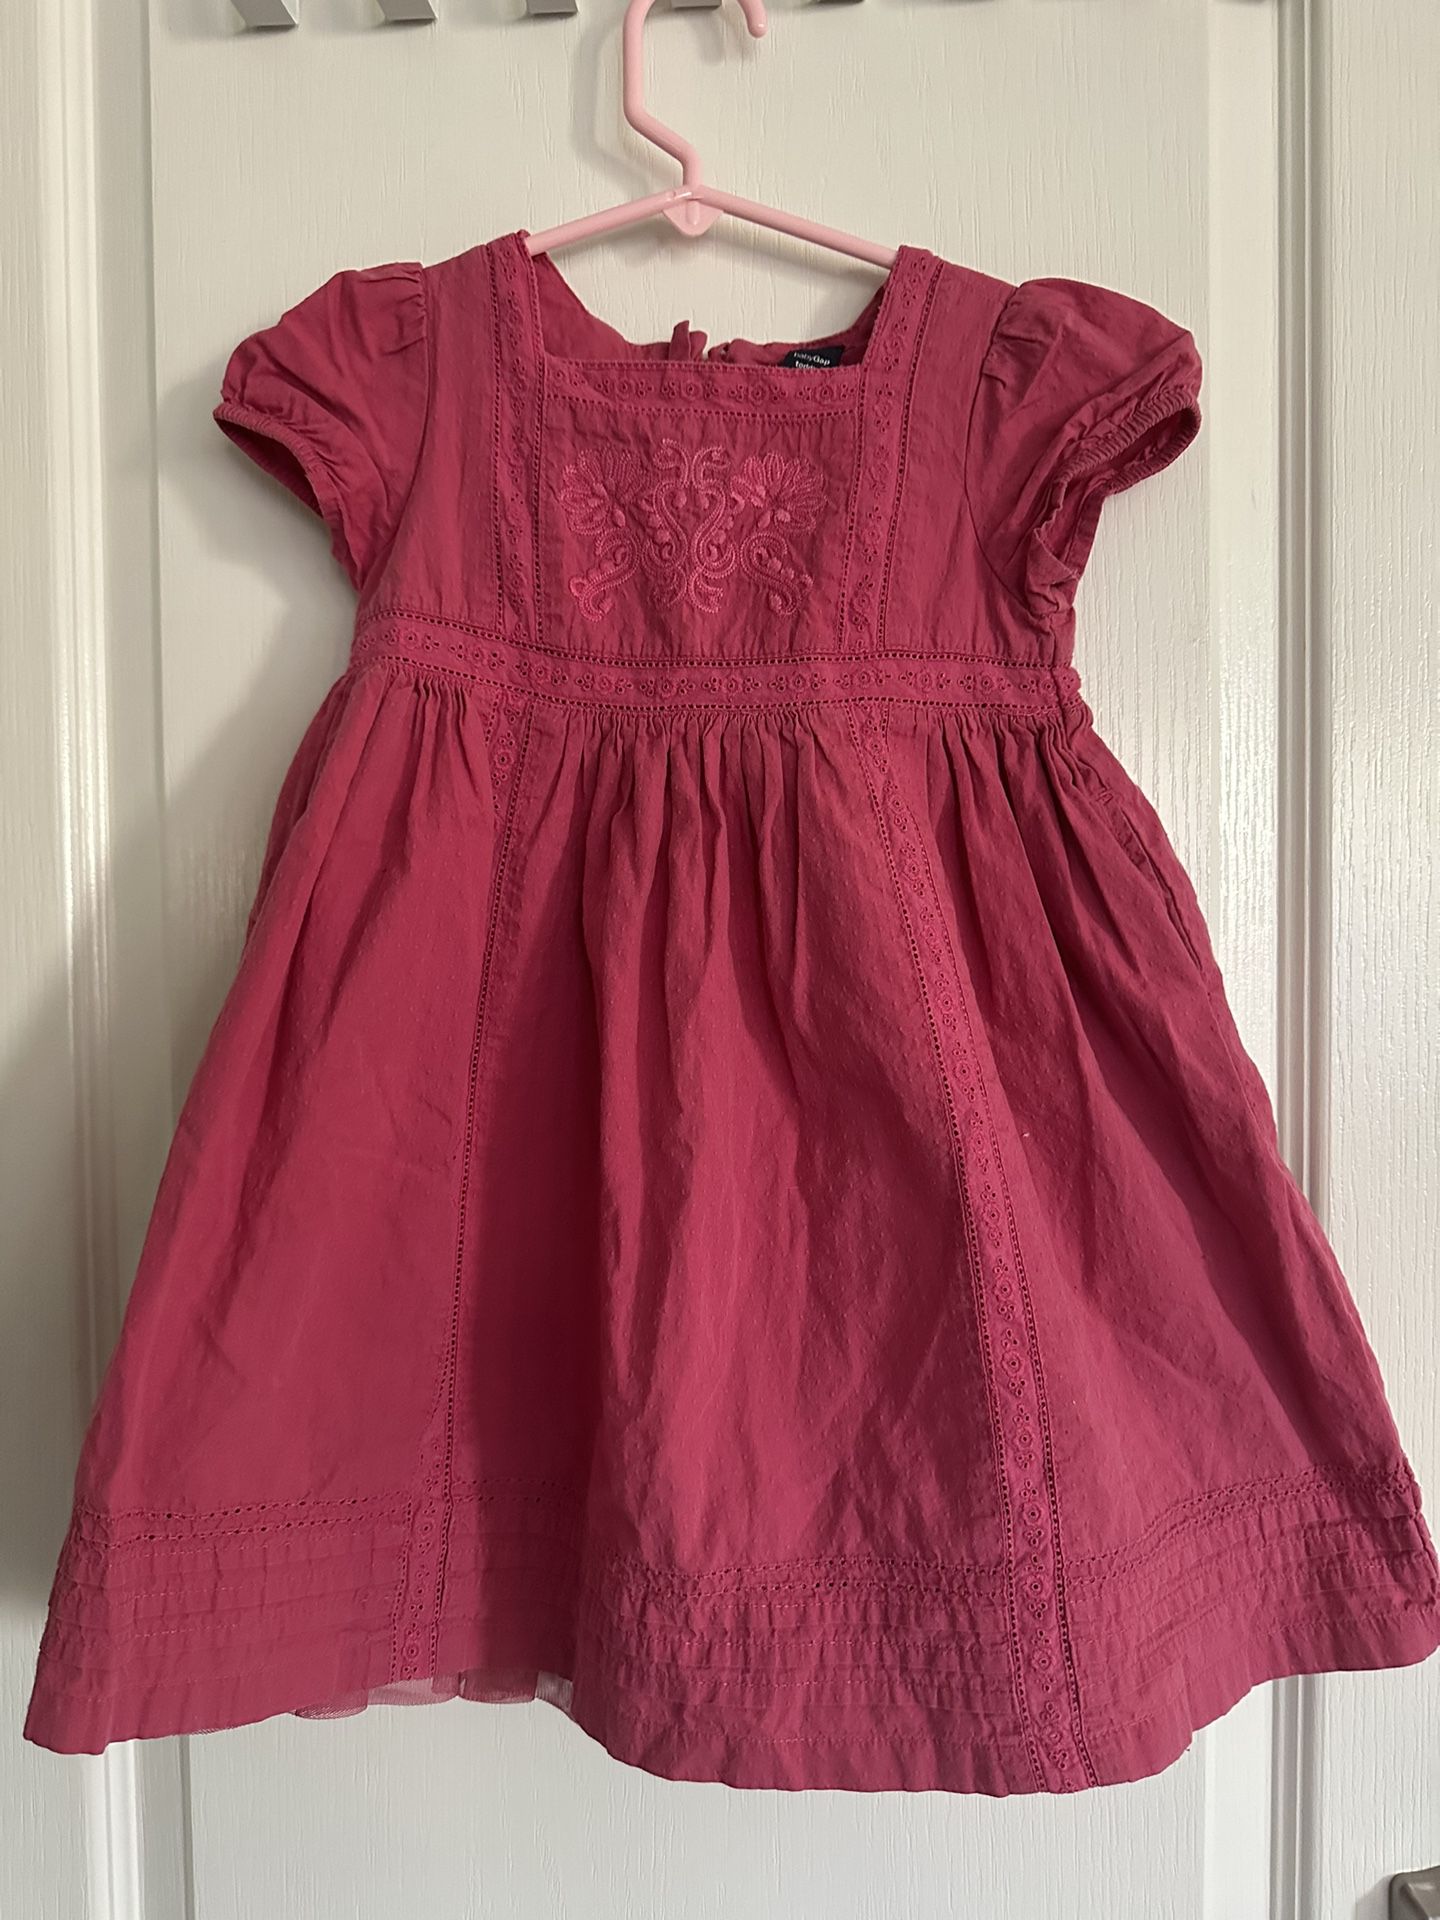 Baby Gap Antique Dust Rose Layered Dress Girls 3T 3